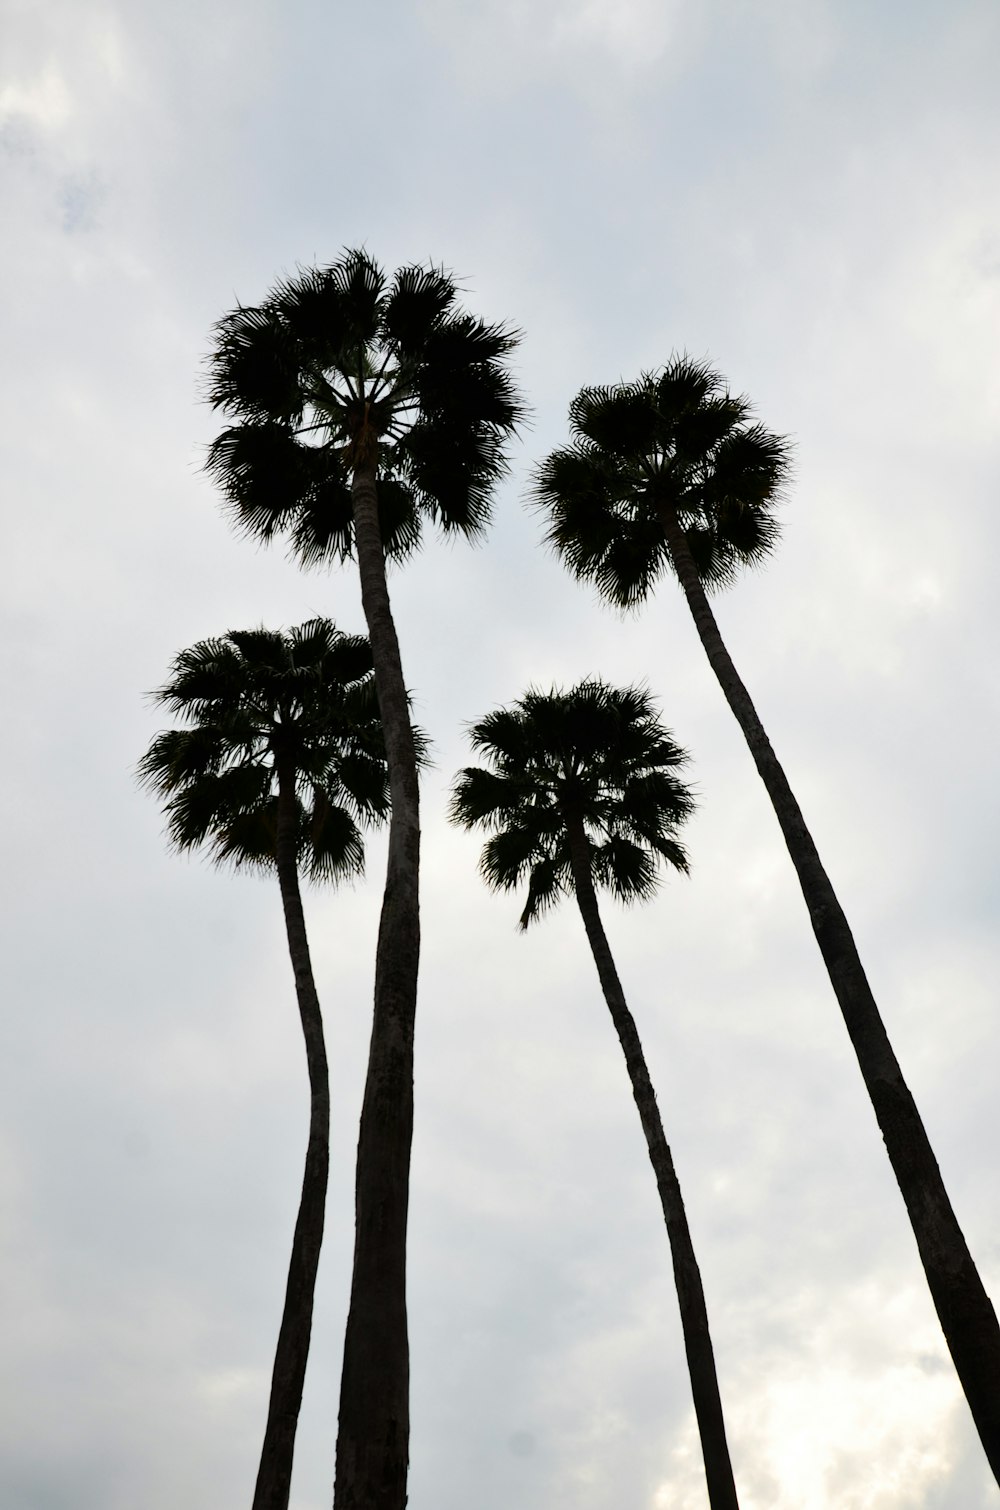 three tall palm trees against a cloudy sky